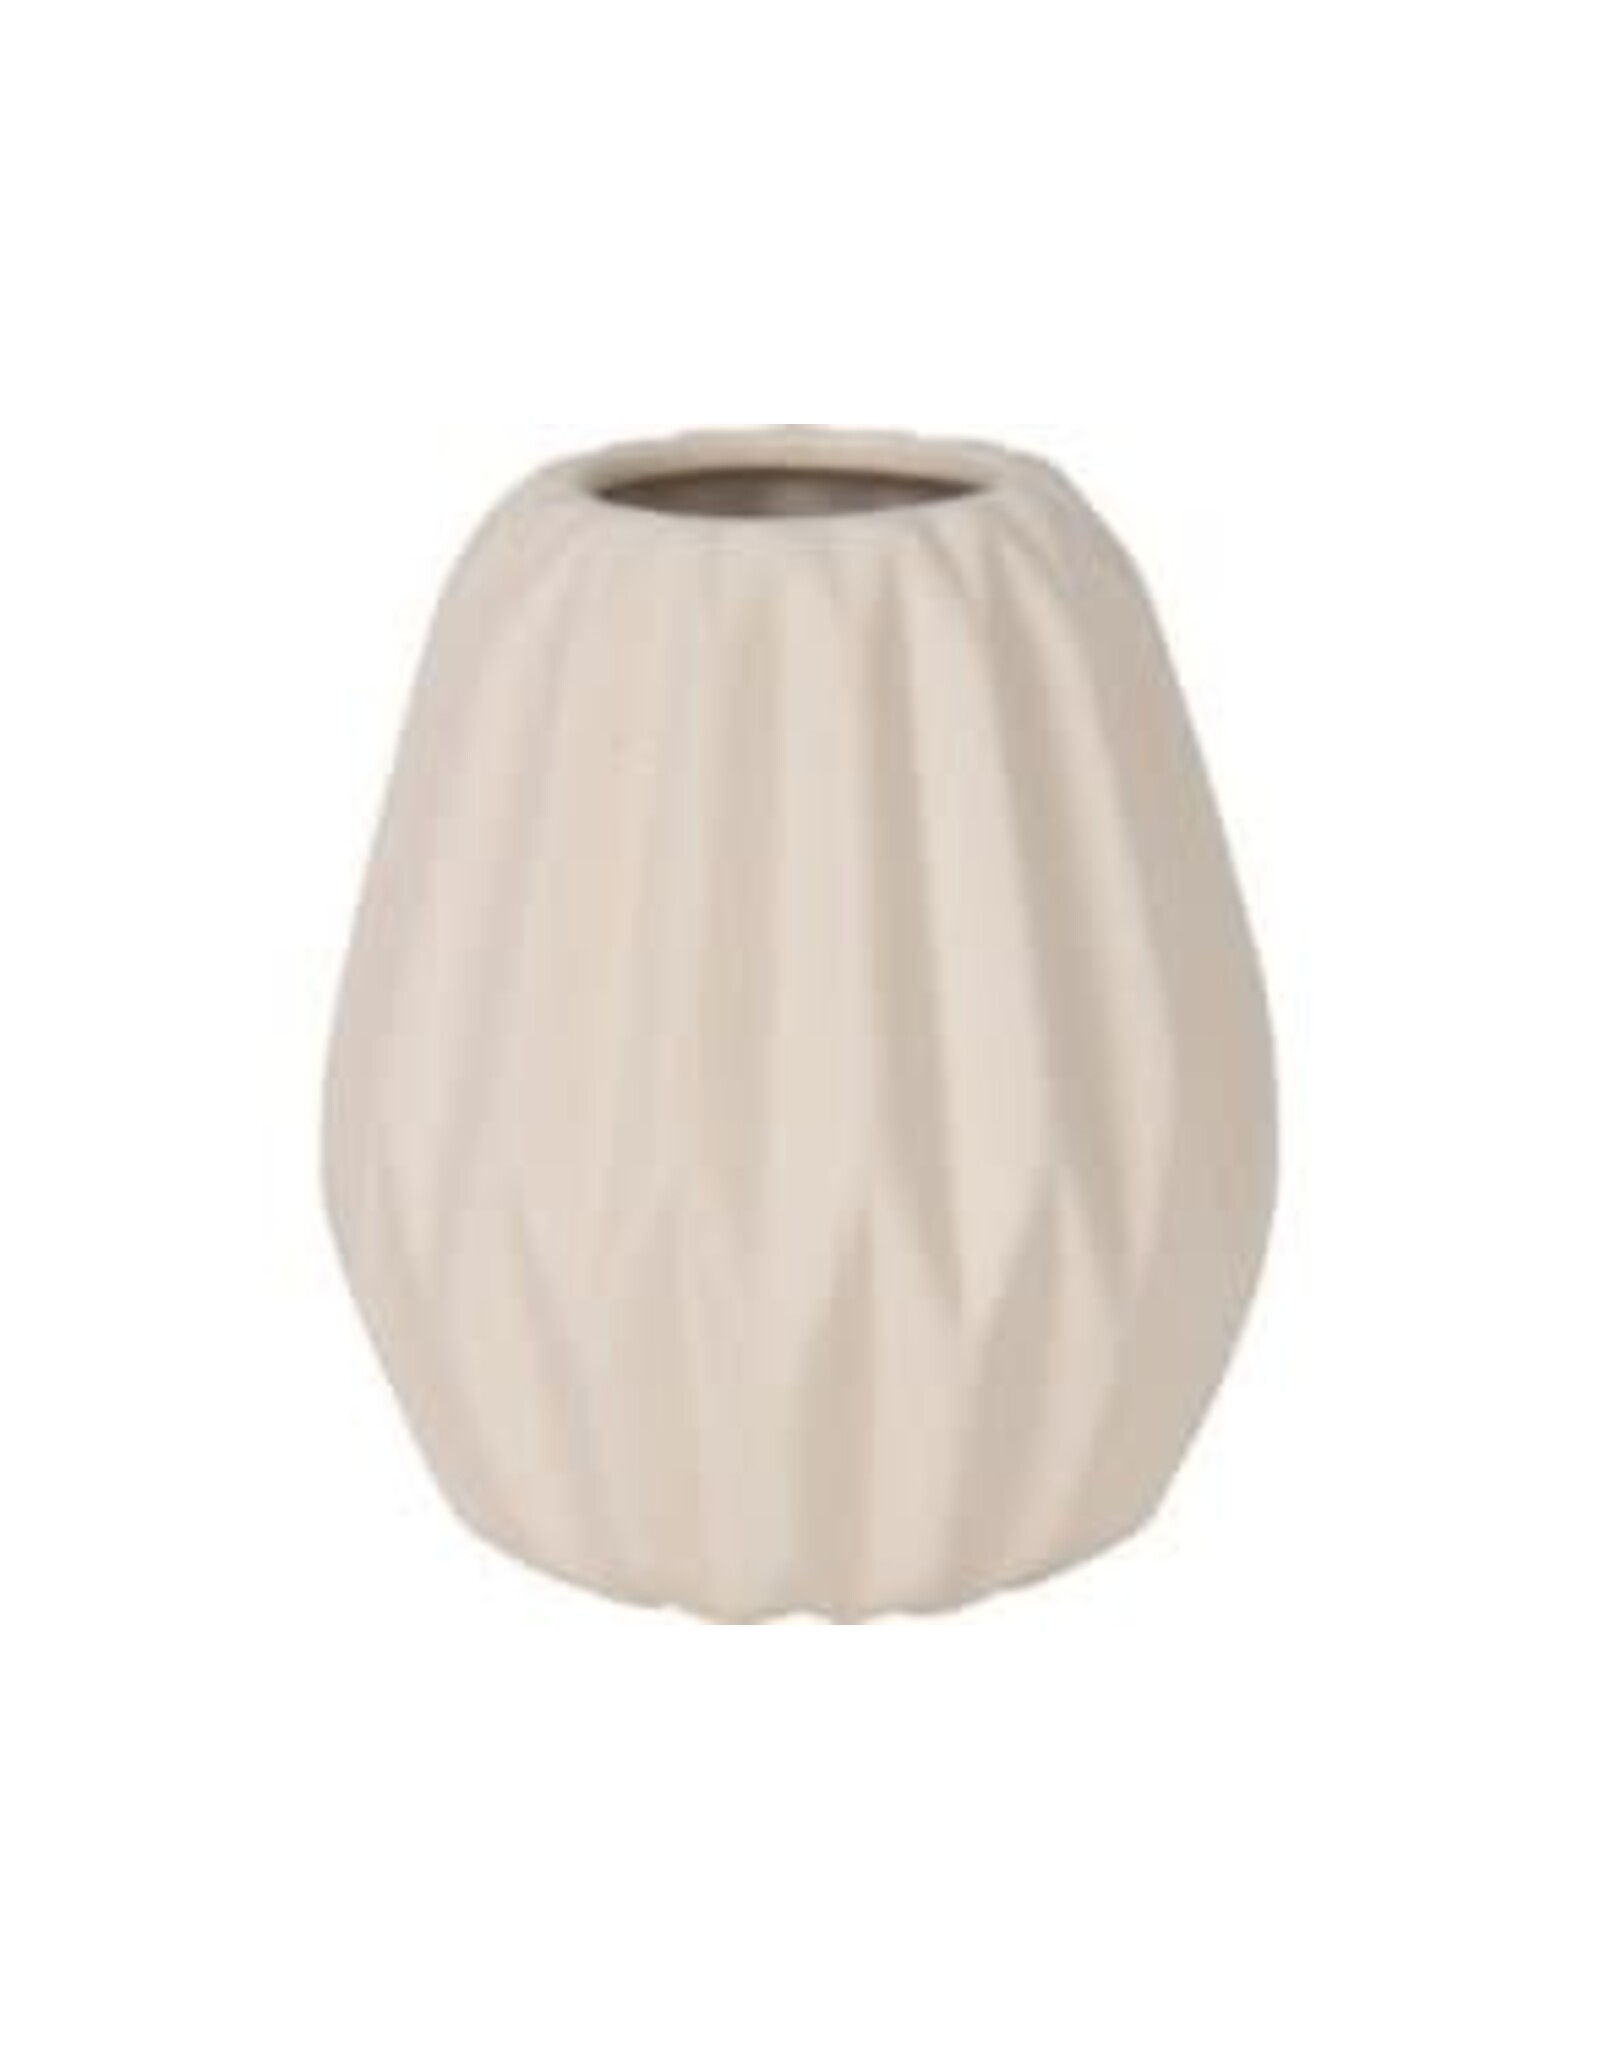 AAE336200 Ribbed White Vase 5"